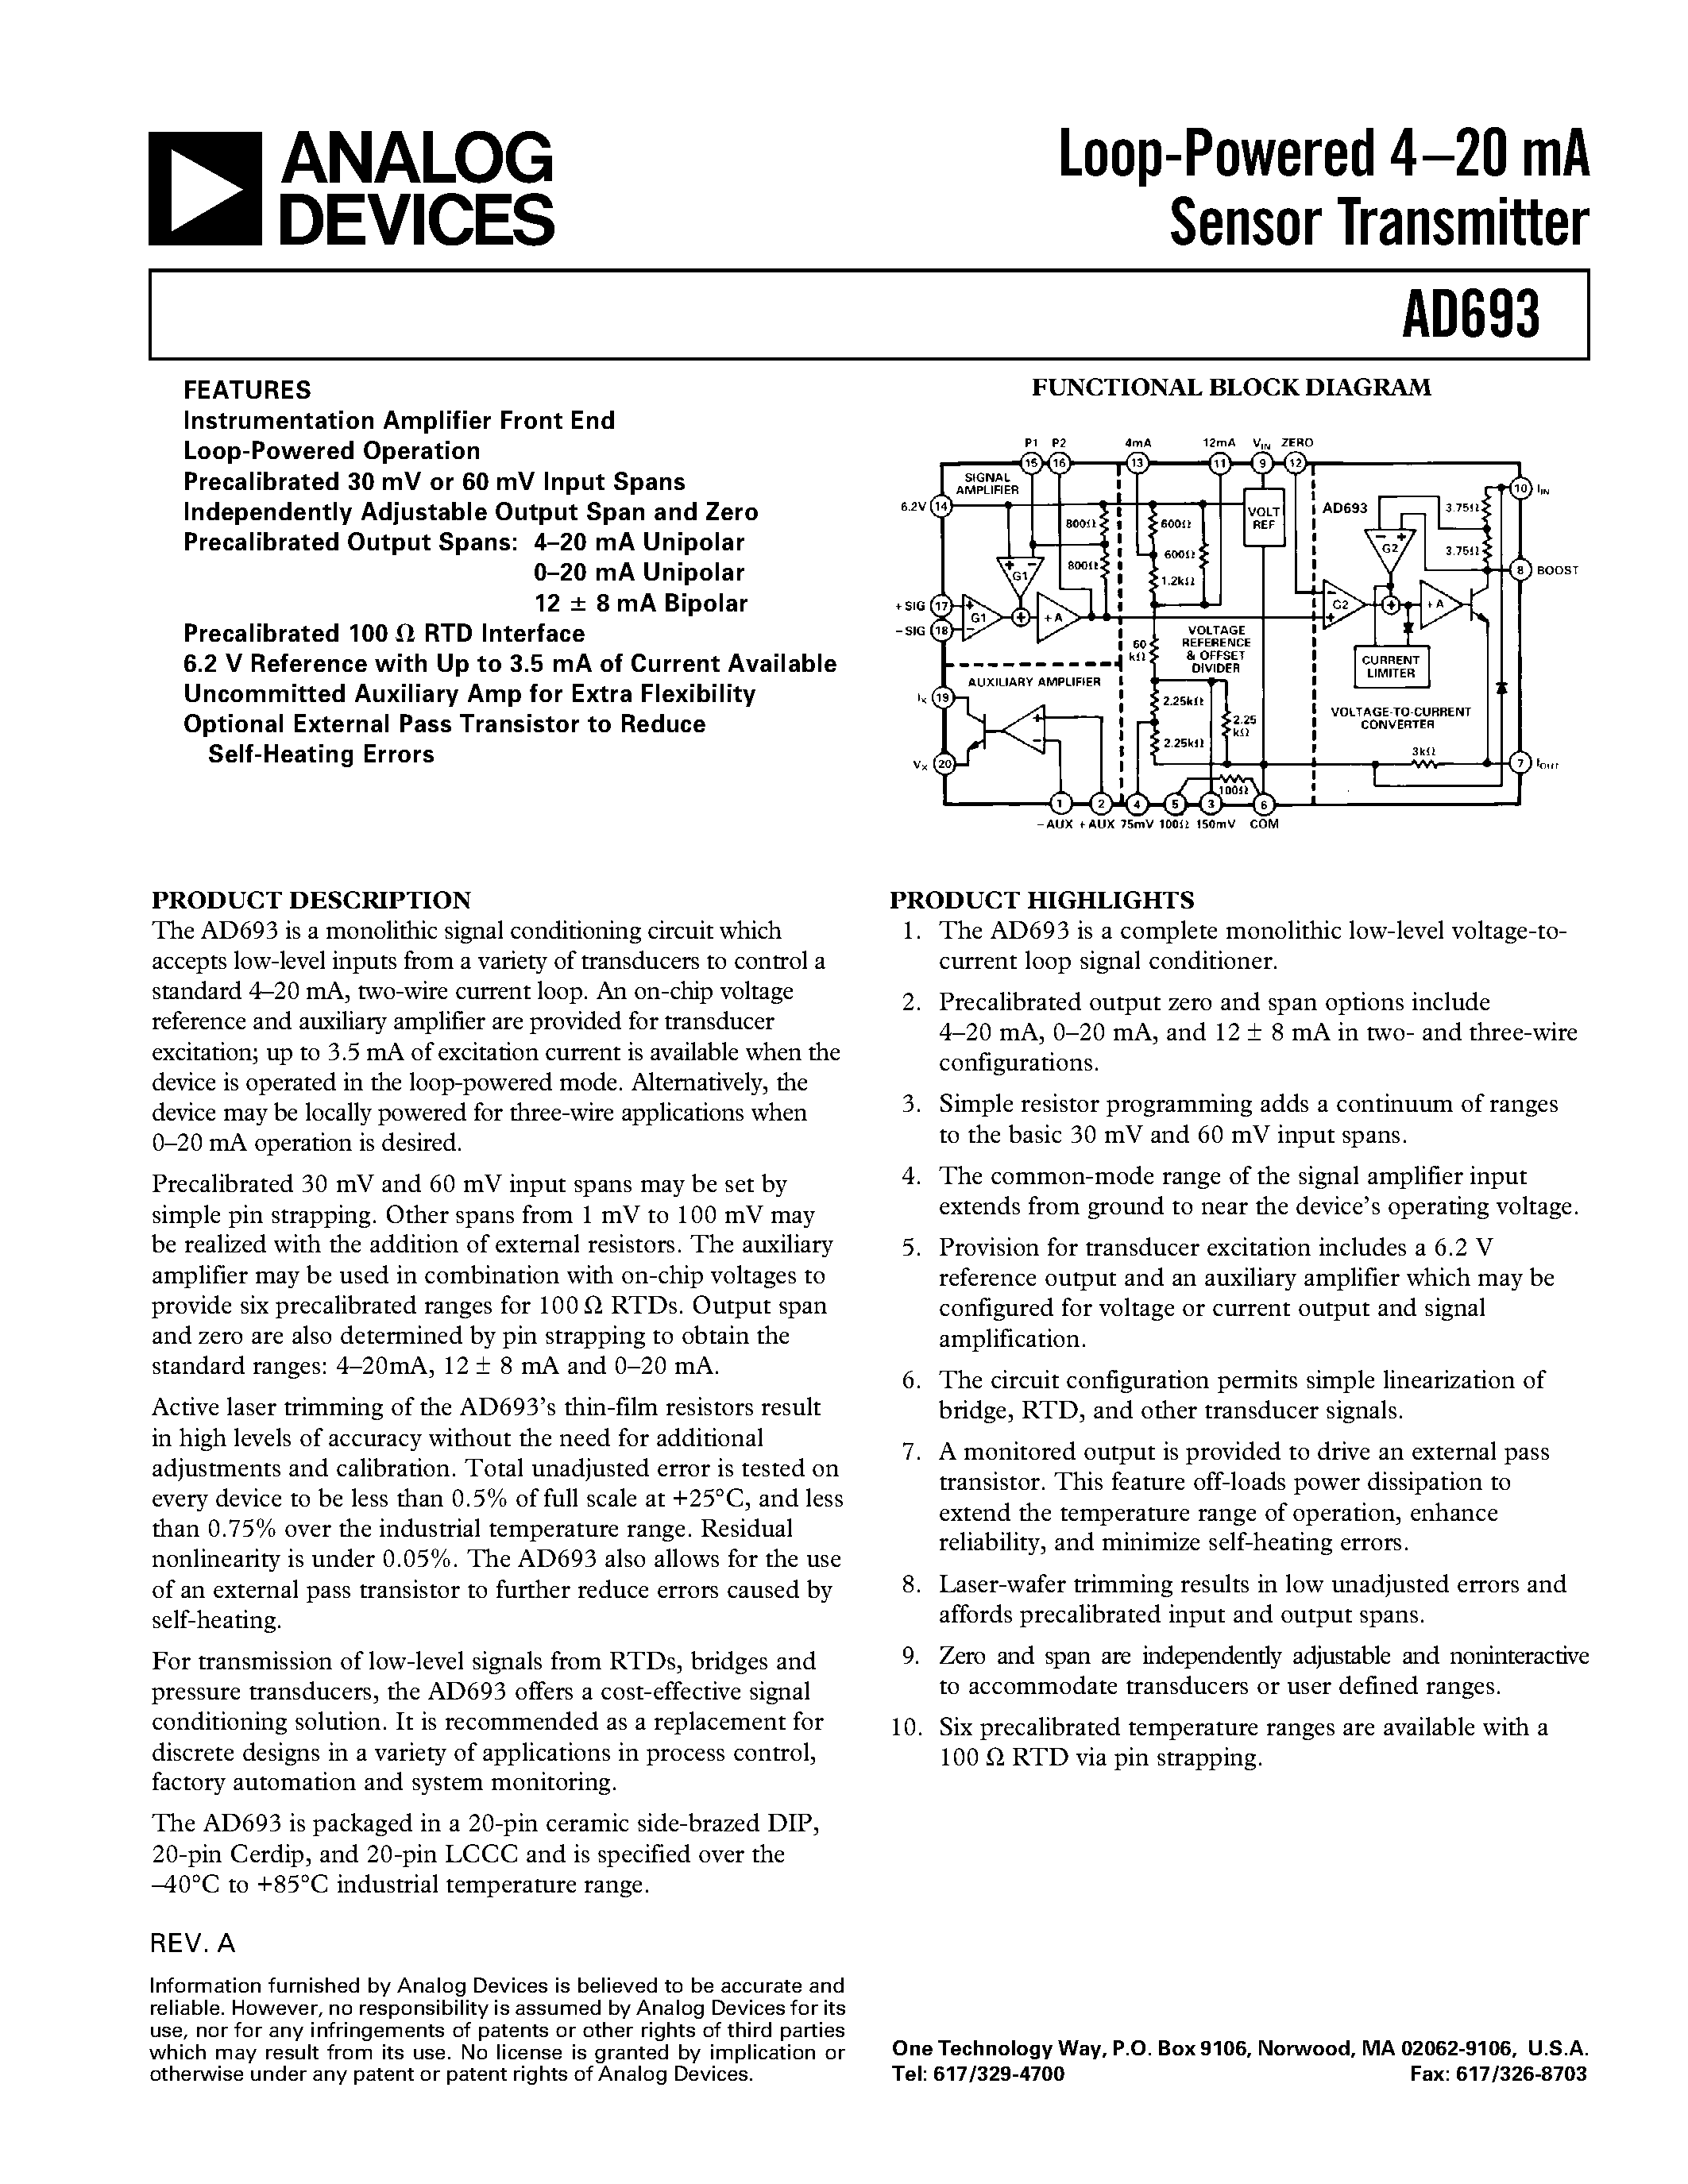 Datasheet AD693AD - Loop-Powered 4.20 mA Sensor Transmitter page 1